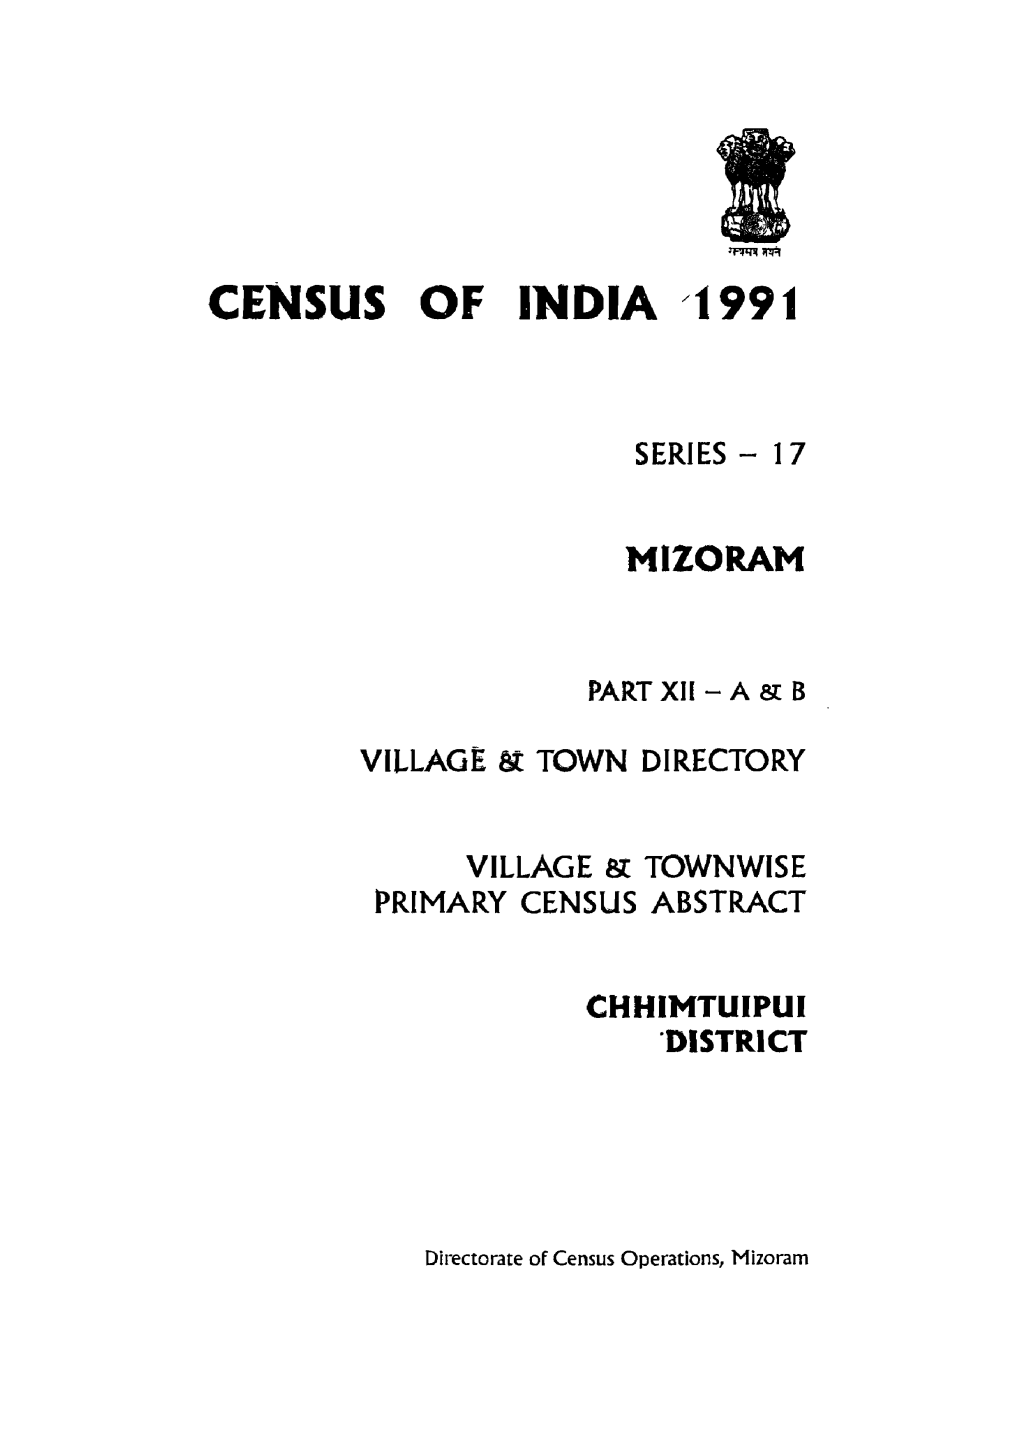 District Census Handbook, Chhmtuipui, Part XII-A & B, Series